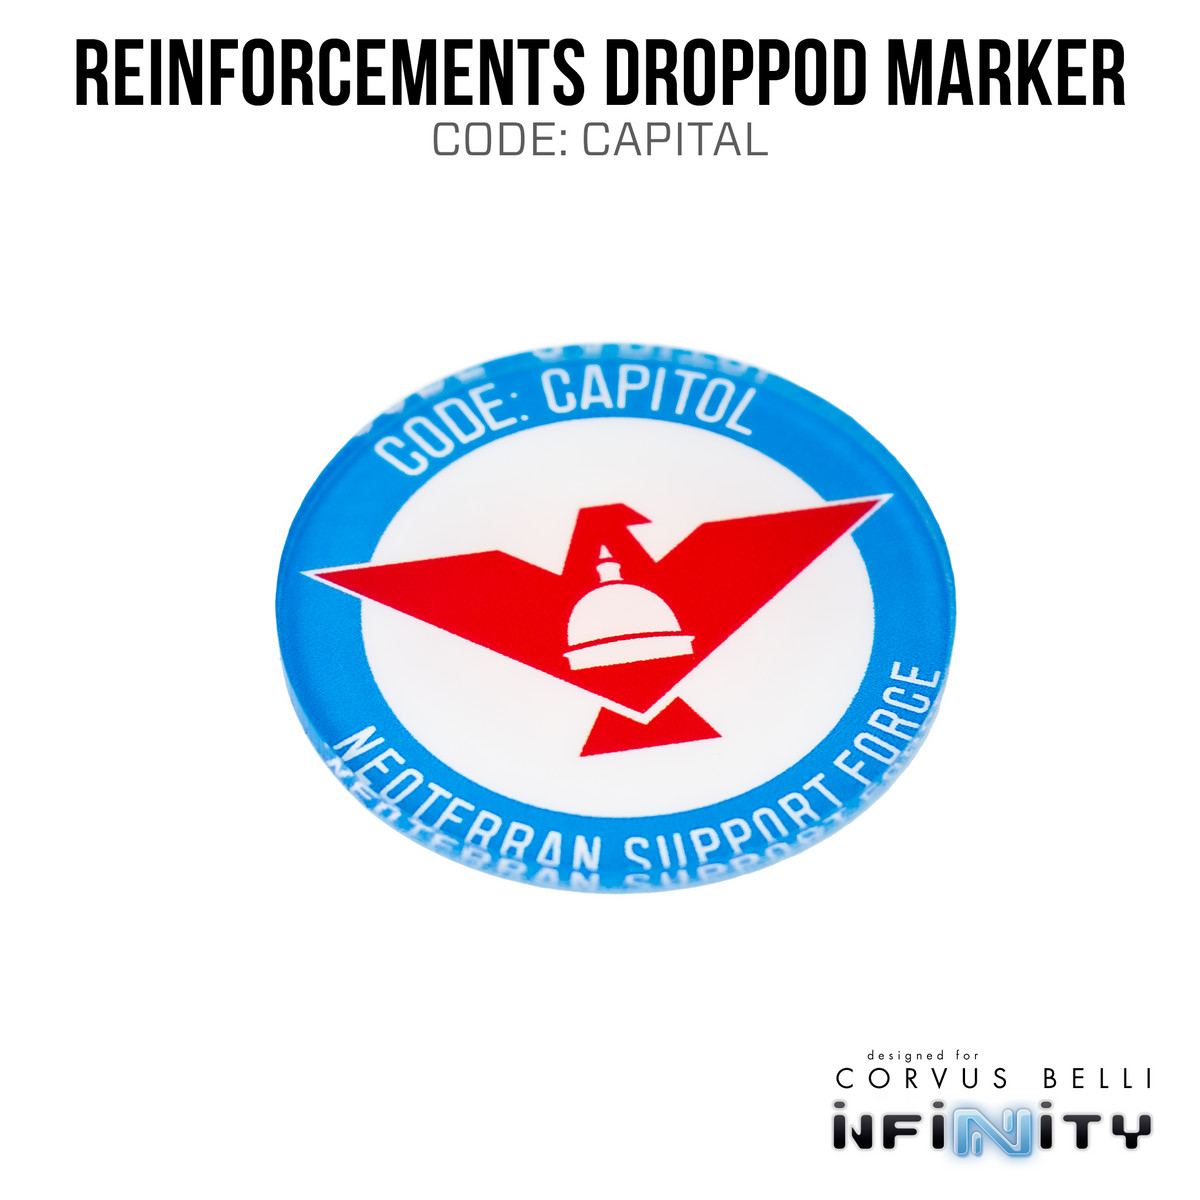 Marcador DropPod de refuerzos (Código:Capital)